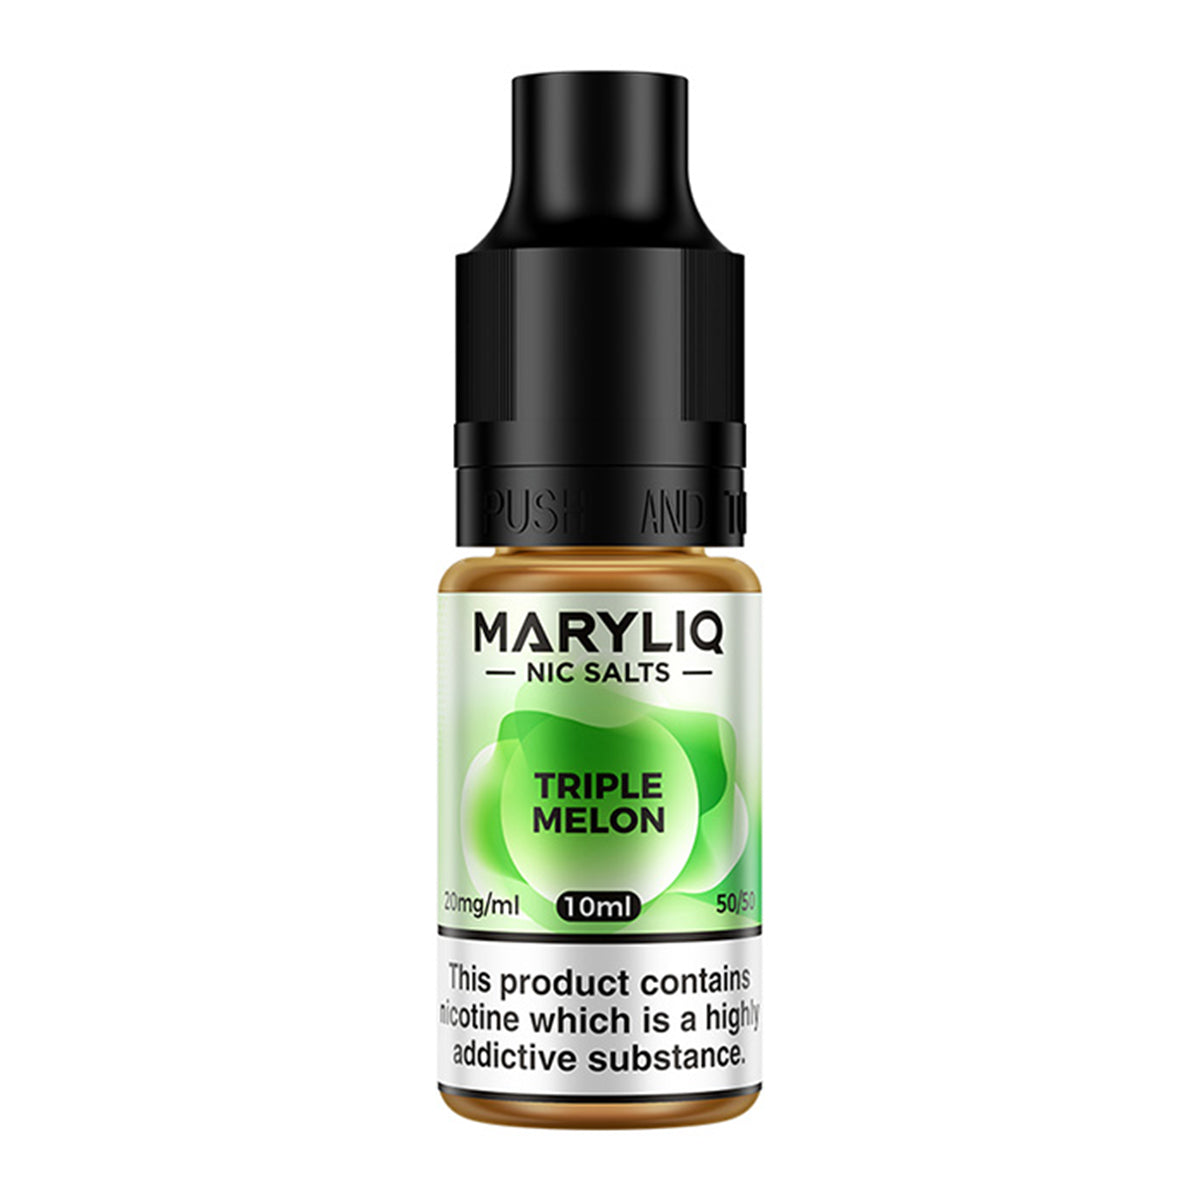 Triple Melon 10ml Nicotine Salt by Lost Mary Maryliq